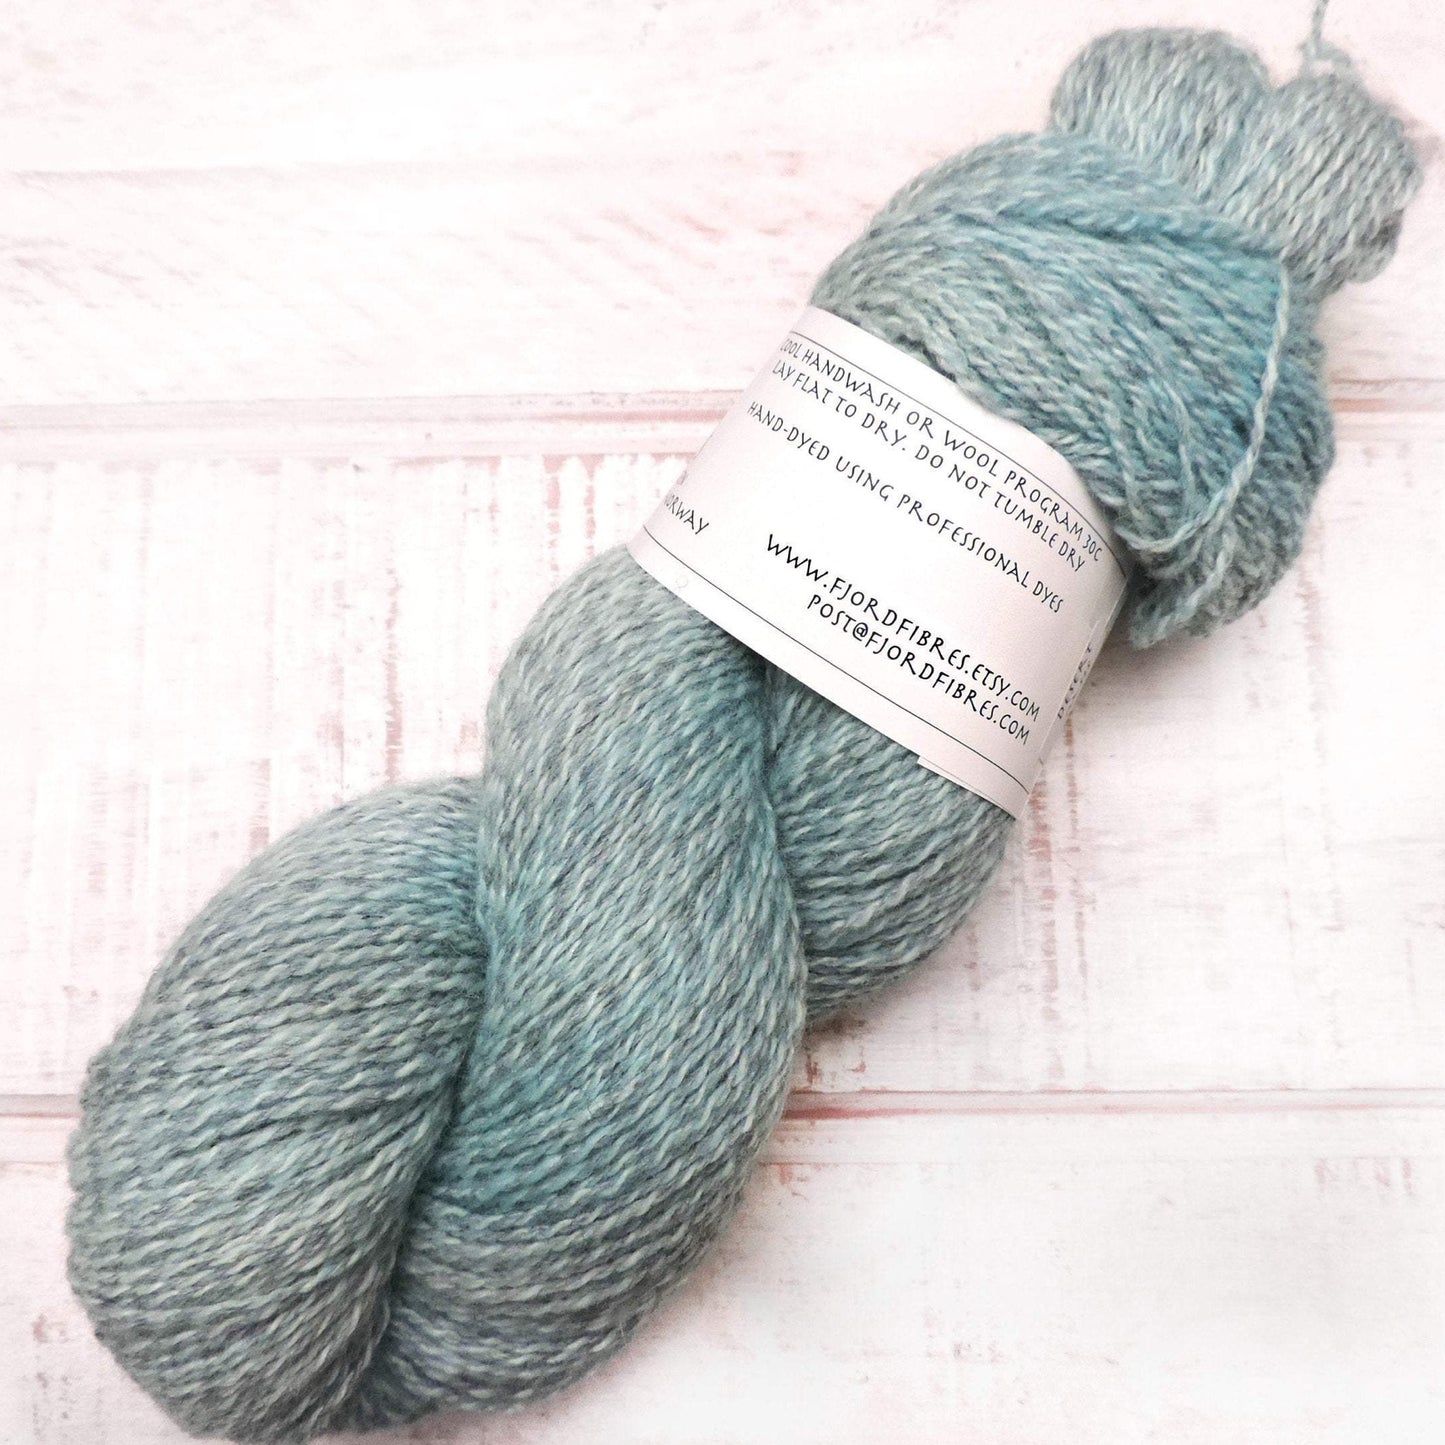 Desert Oasis - Trollfjord Sock - Hand Dyed Yarn - Marled Yarn